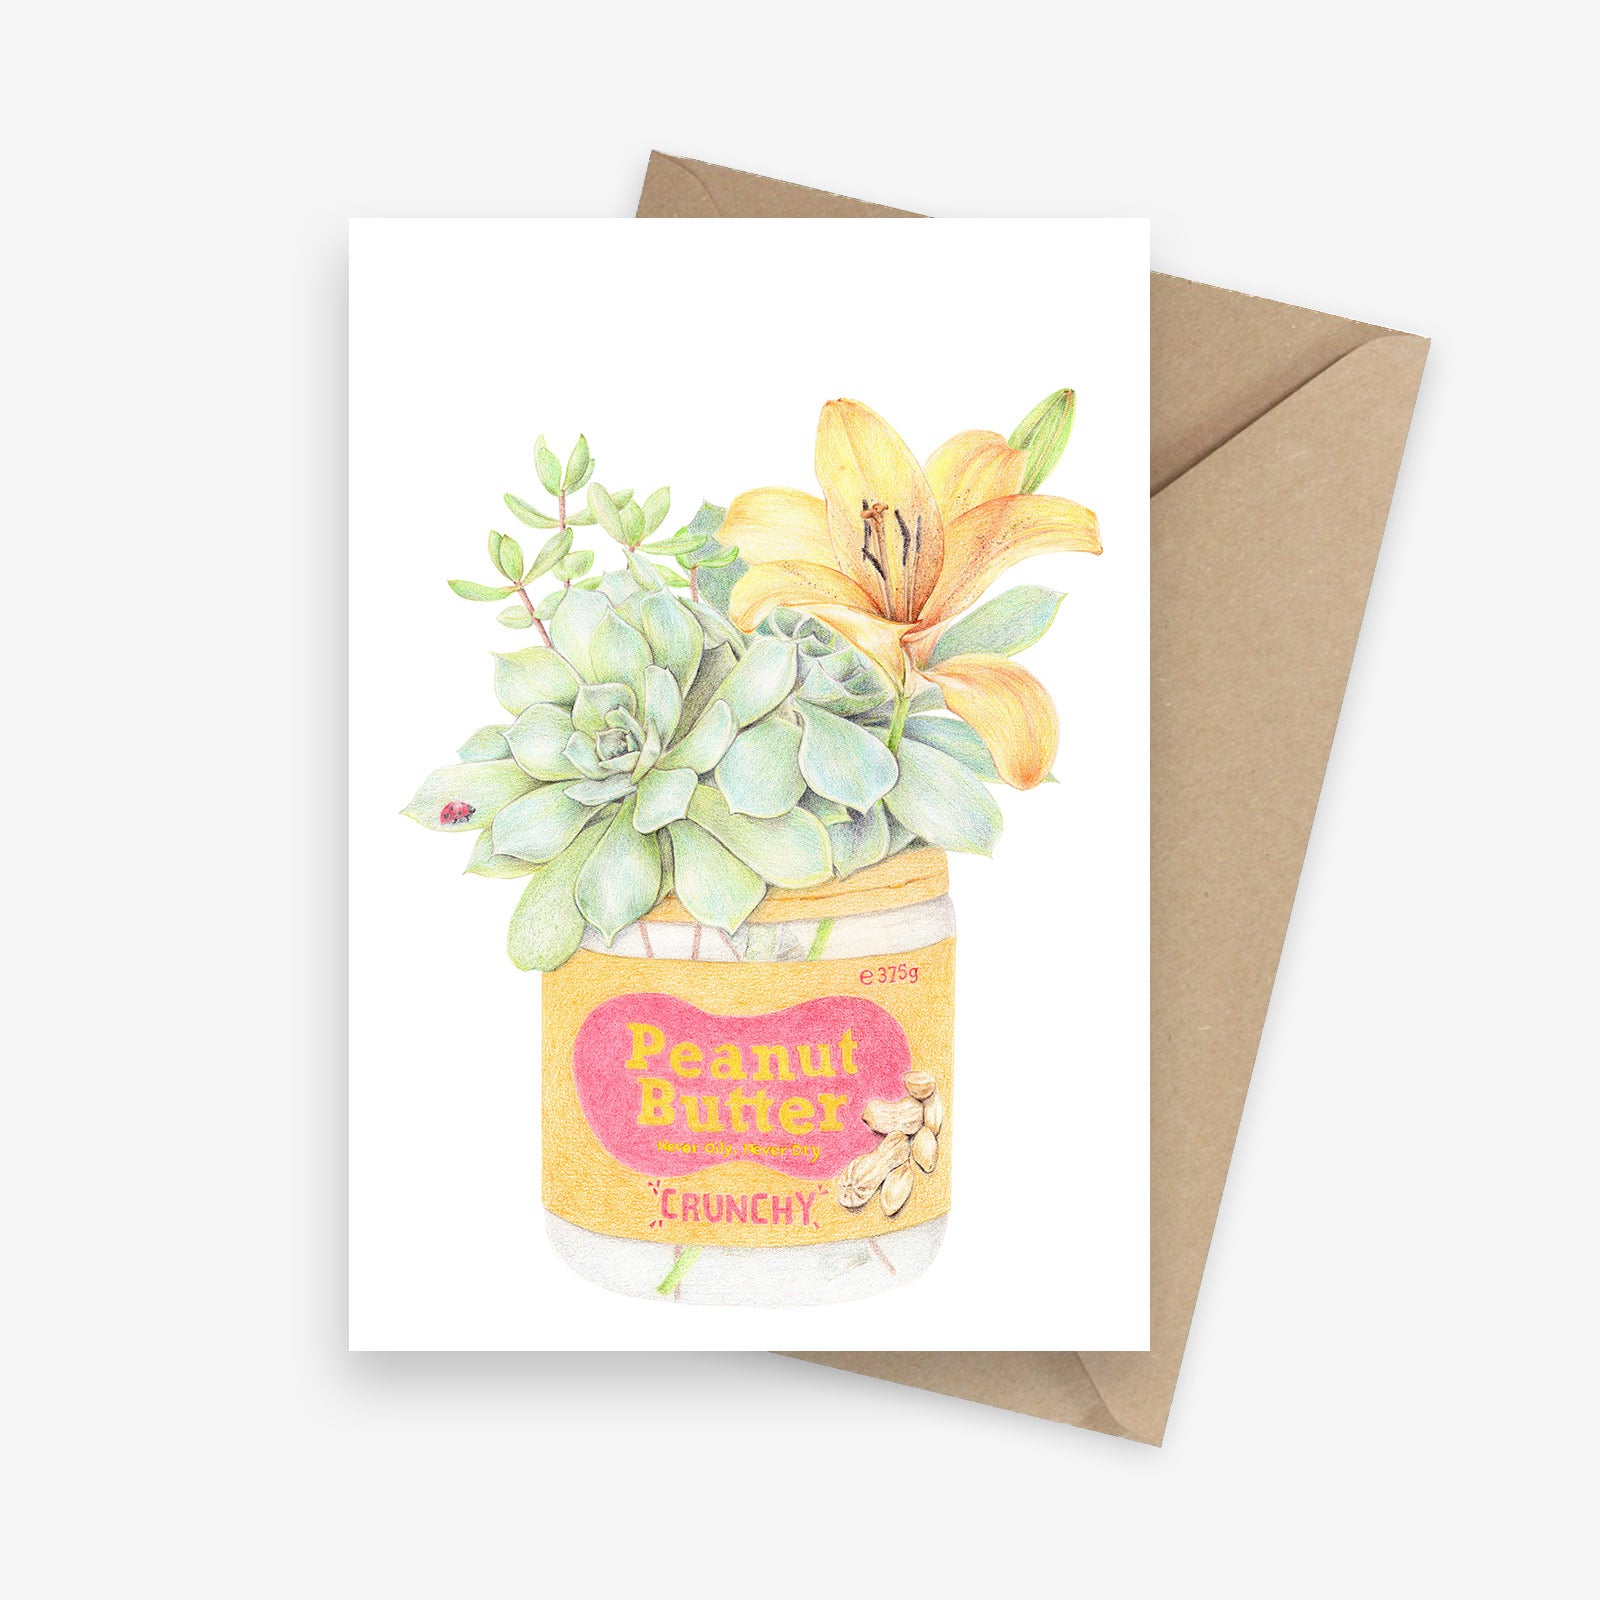 Greeting card featuring a succulent bouquet in a peanut butter jar.